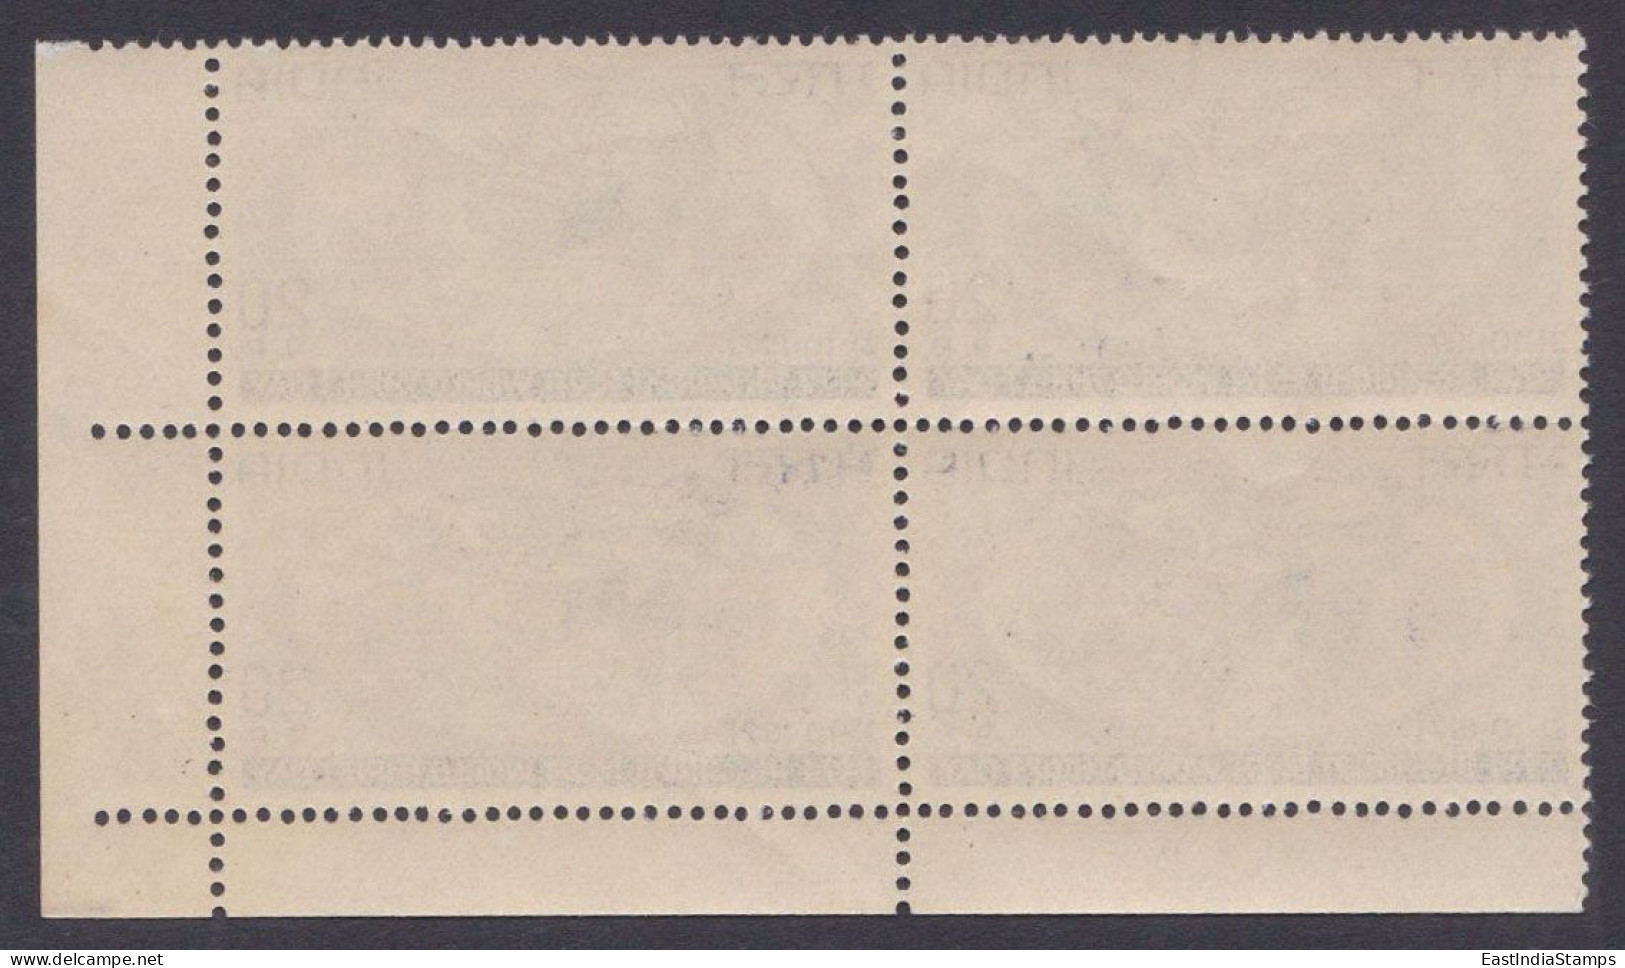 Inde India 1971 MNH World Thrift Day, Savings, Finance, Economy, Banking, Block - Unused Stamps